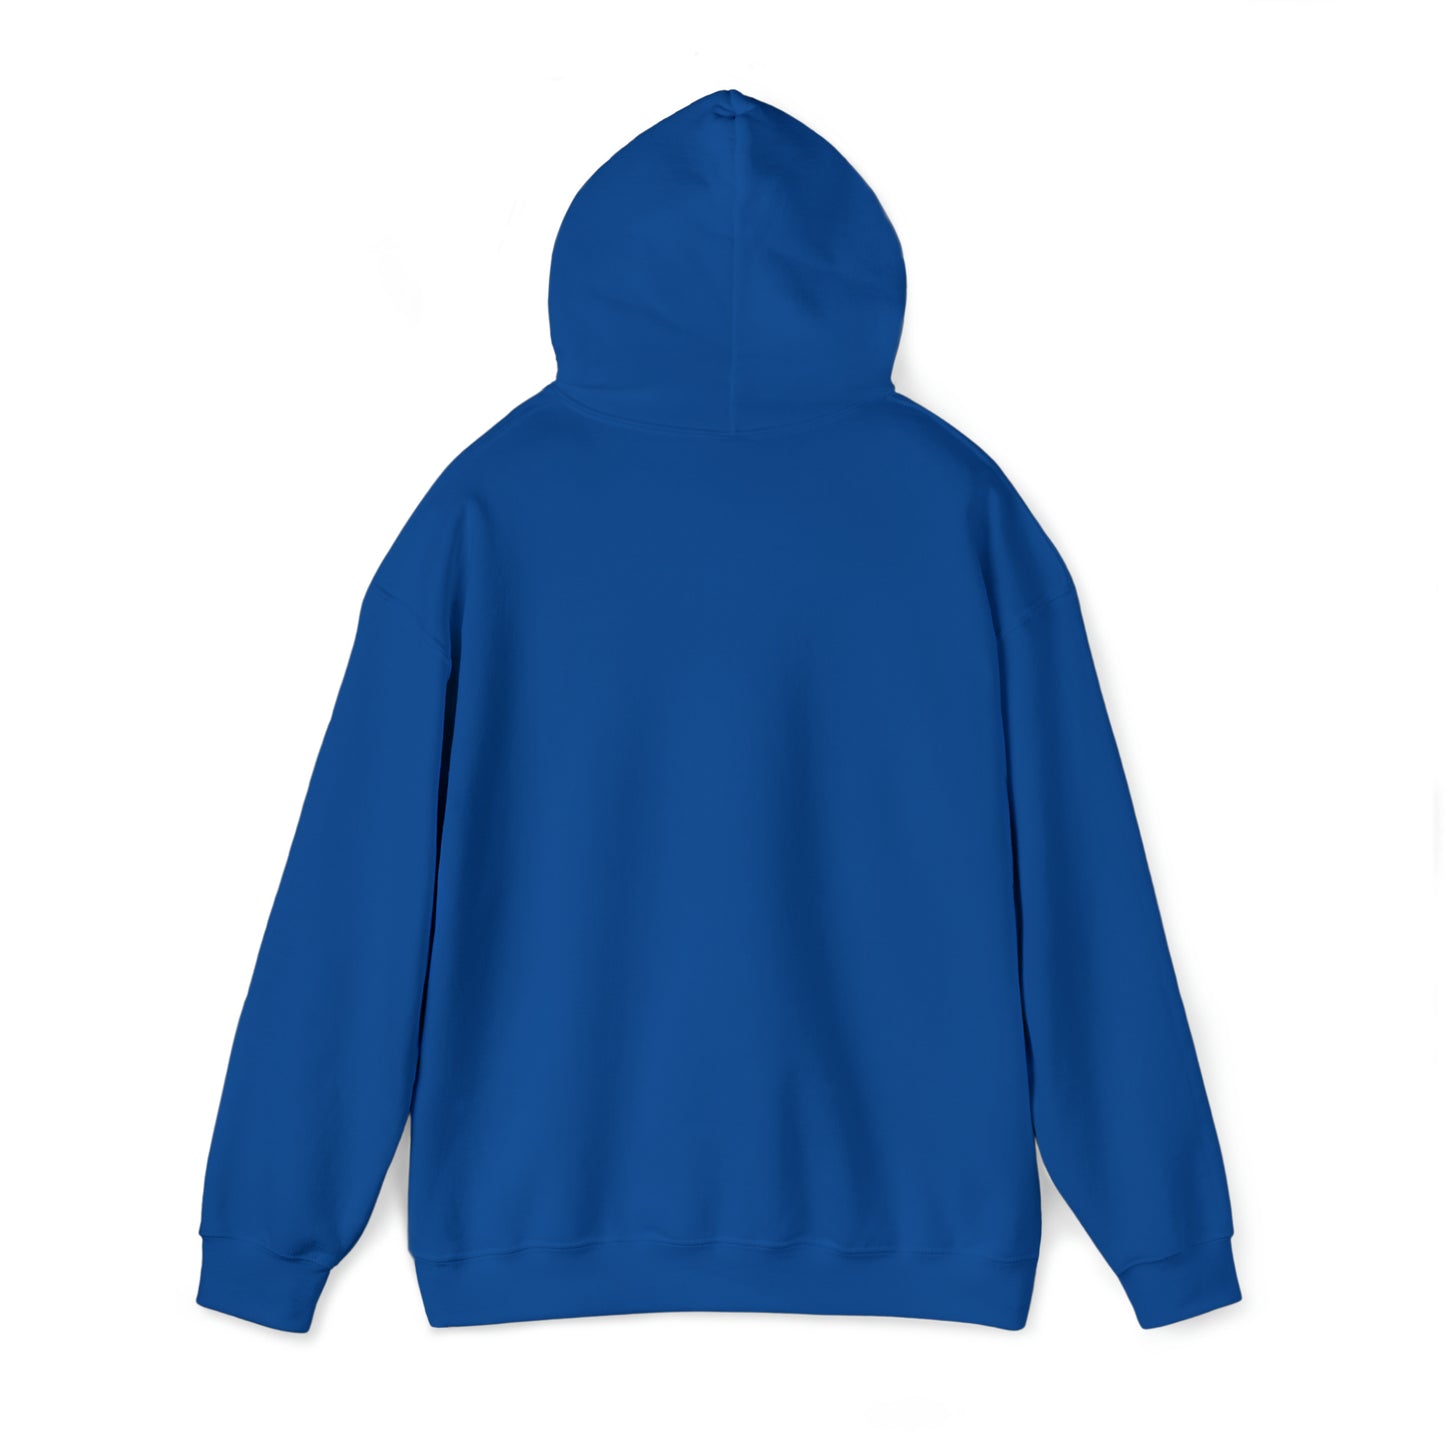 Love Unisex Heavy Blend™ Hooded Sweatshirt